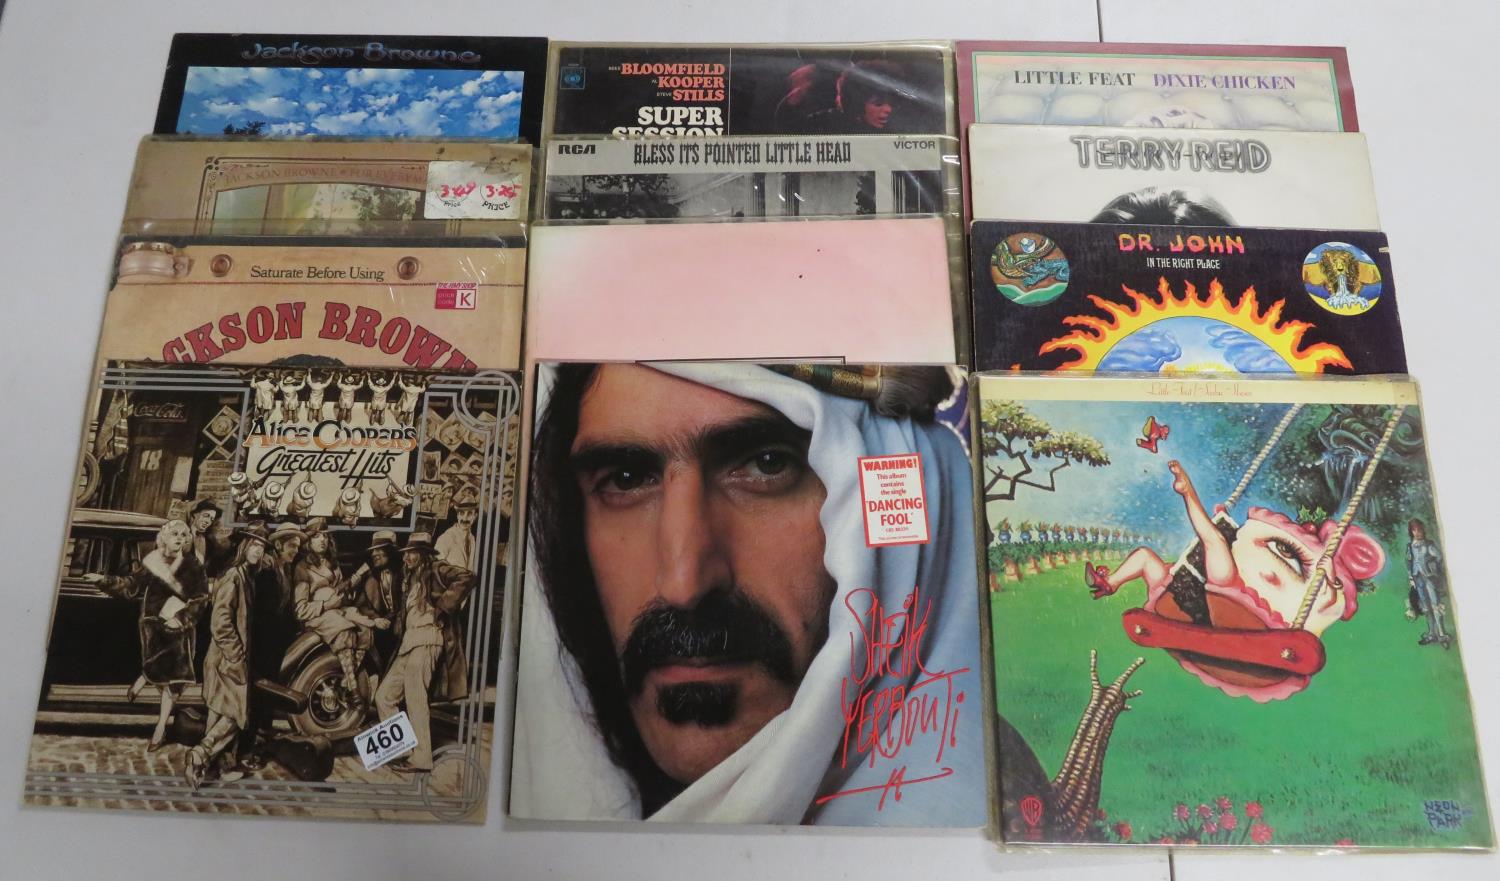 12x 33rpm albums including Alice Cooper, Jackson Brown, Frank Zappa, Jefferson Airplane etc